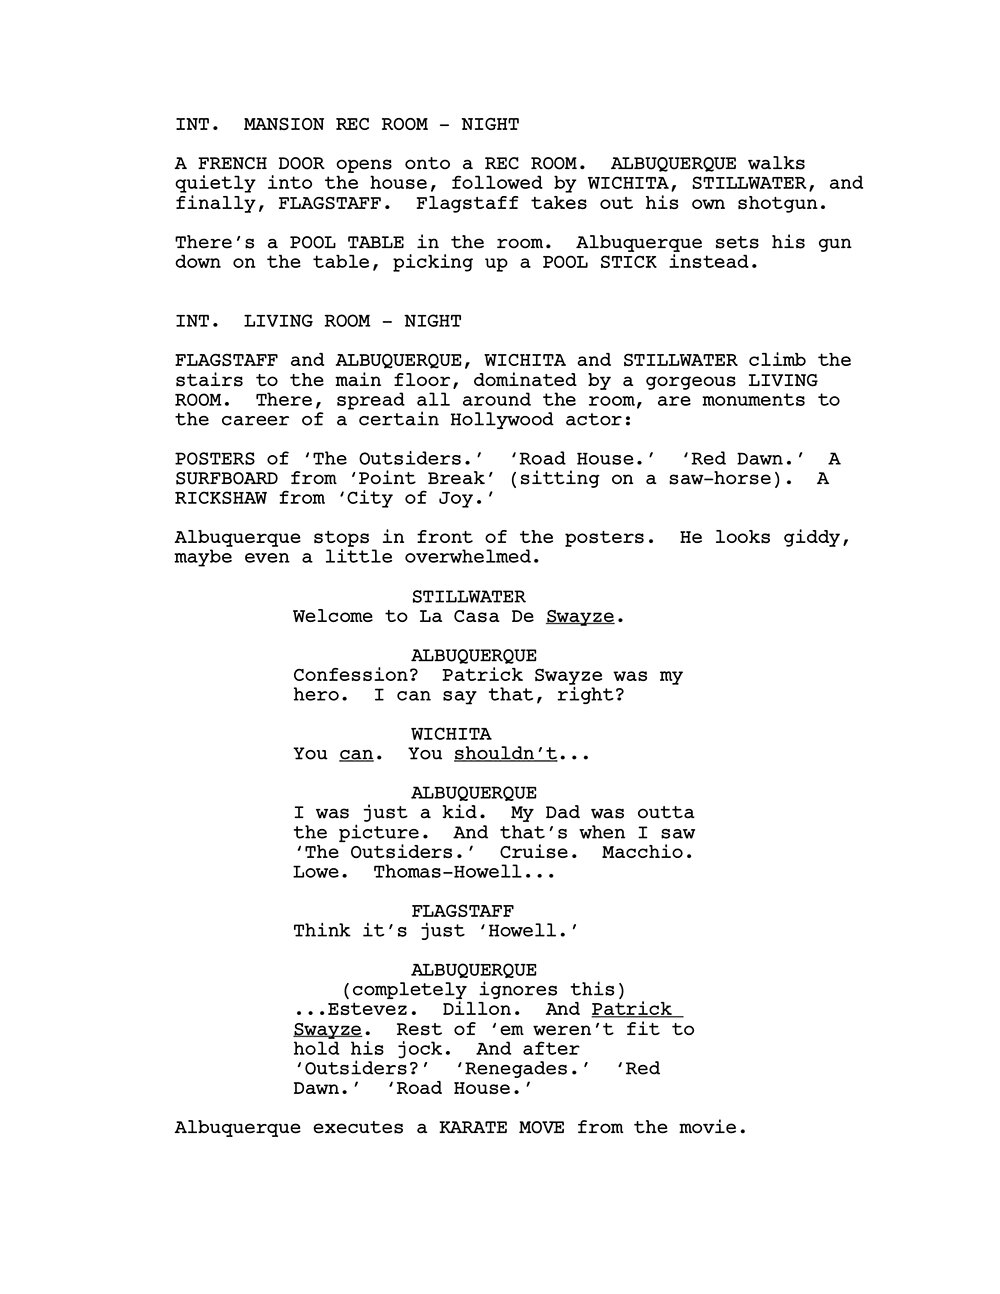 Zombieland: Bill Murray role was originally written for Patrick Swayze